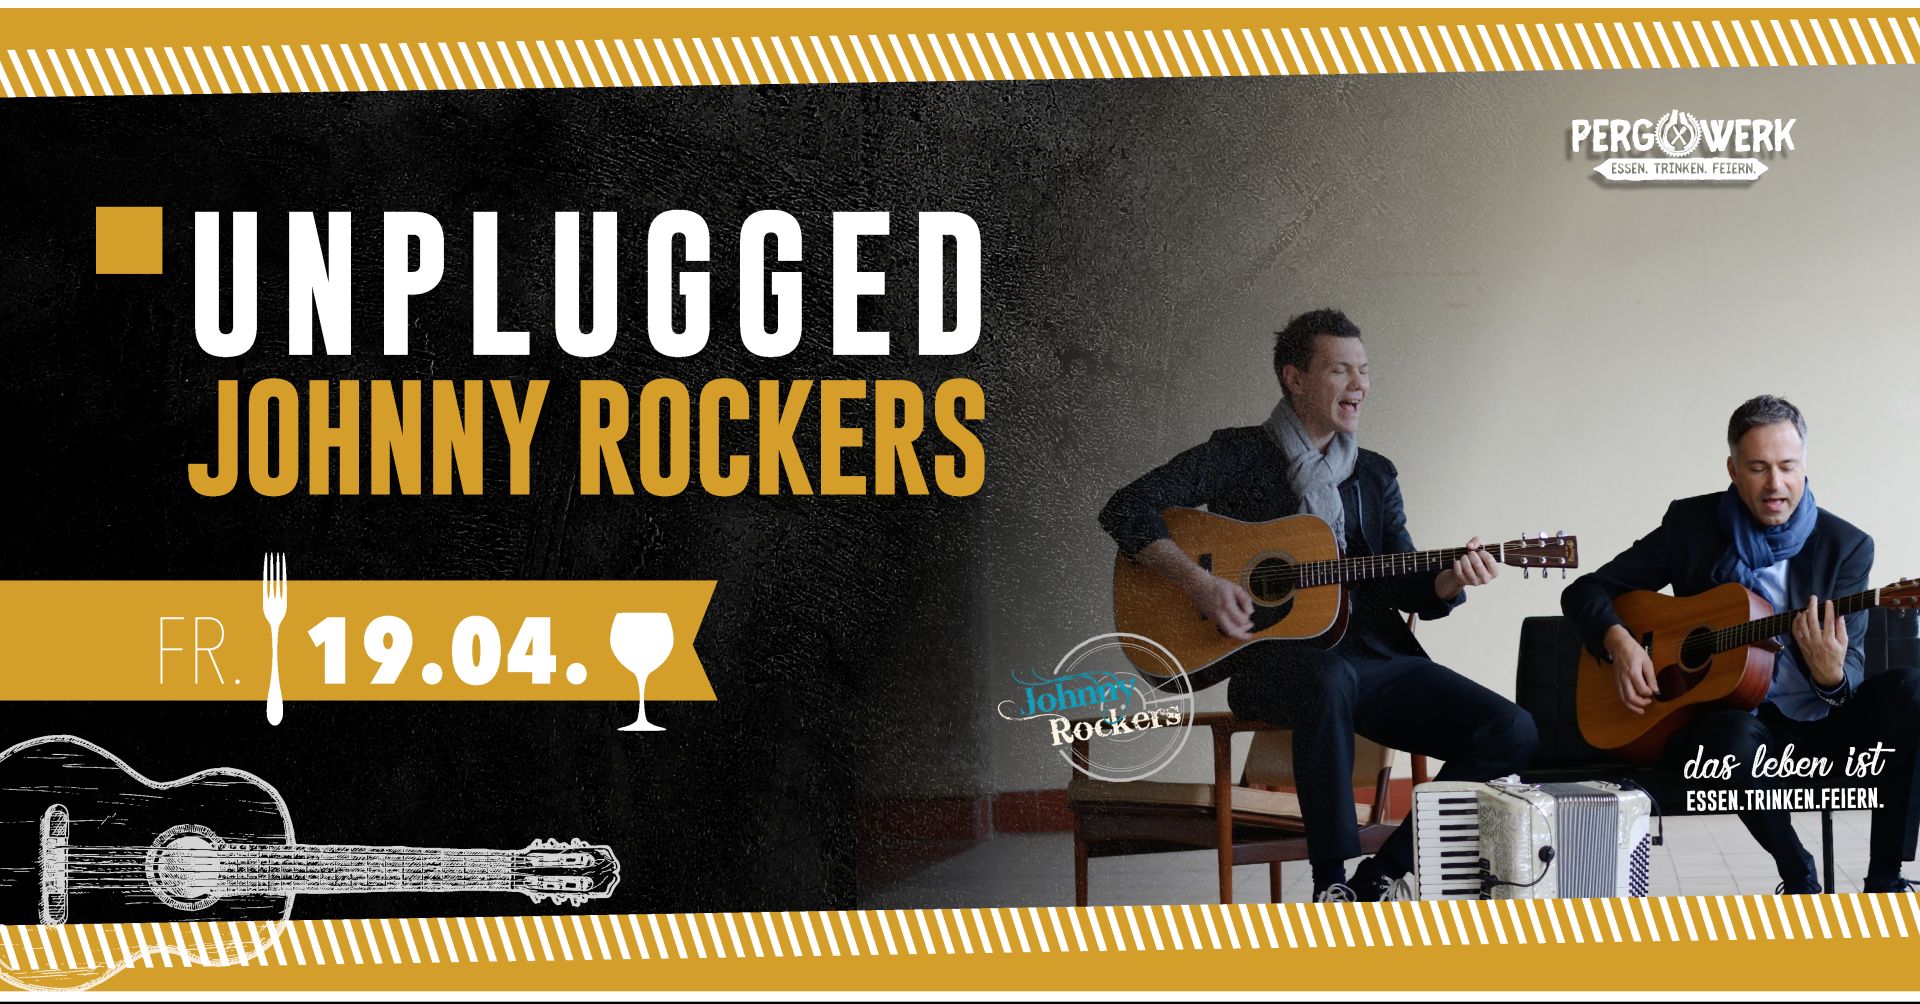 Pergwerk unplugged mit Johnny Rockers | FR 19.04.